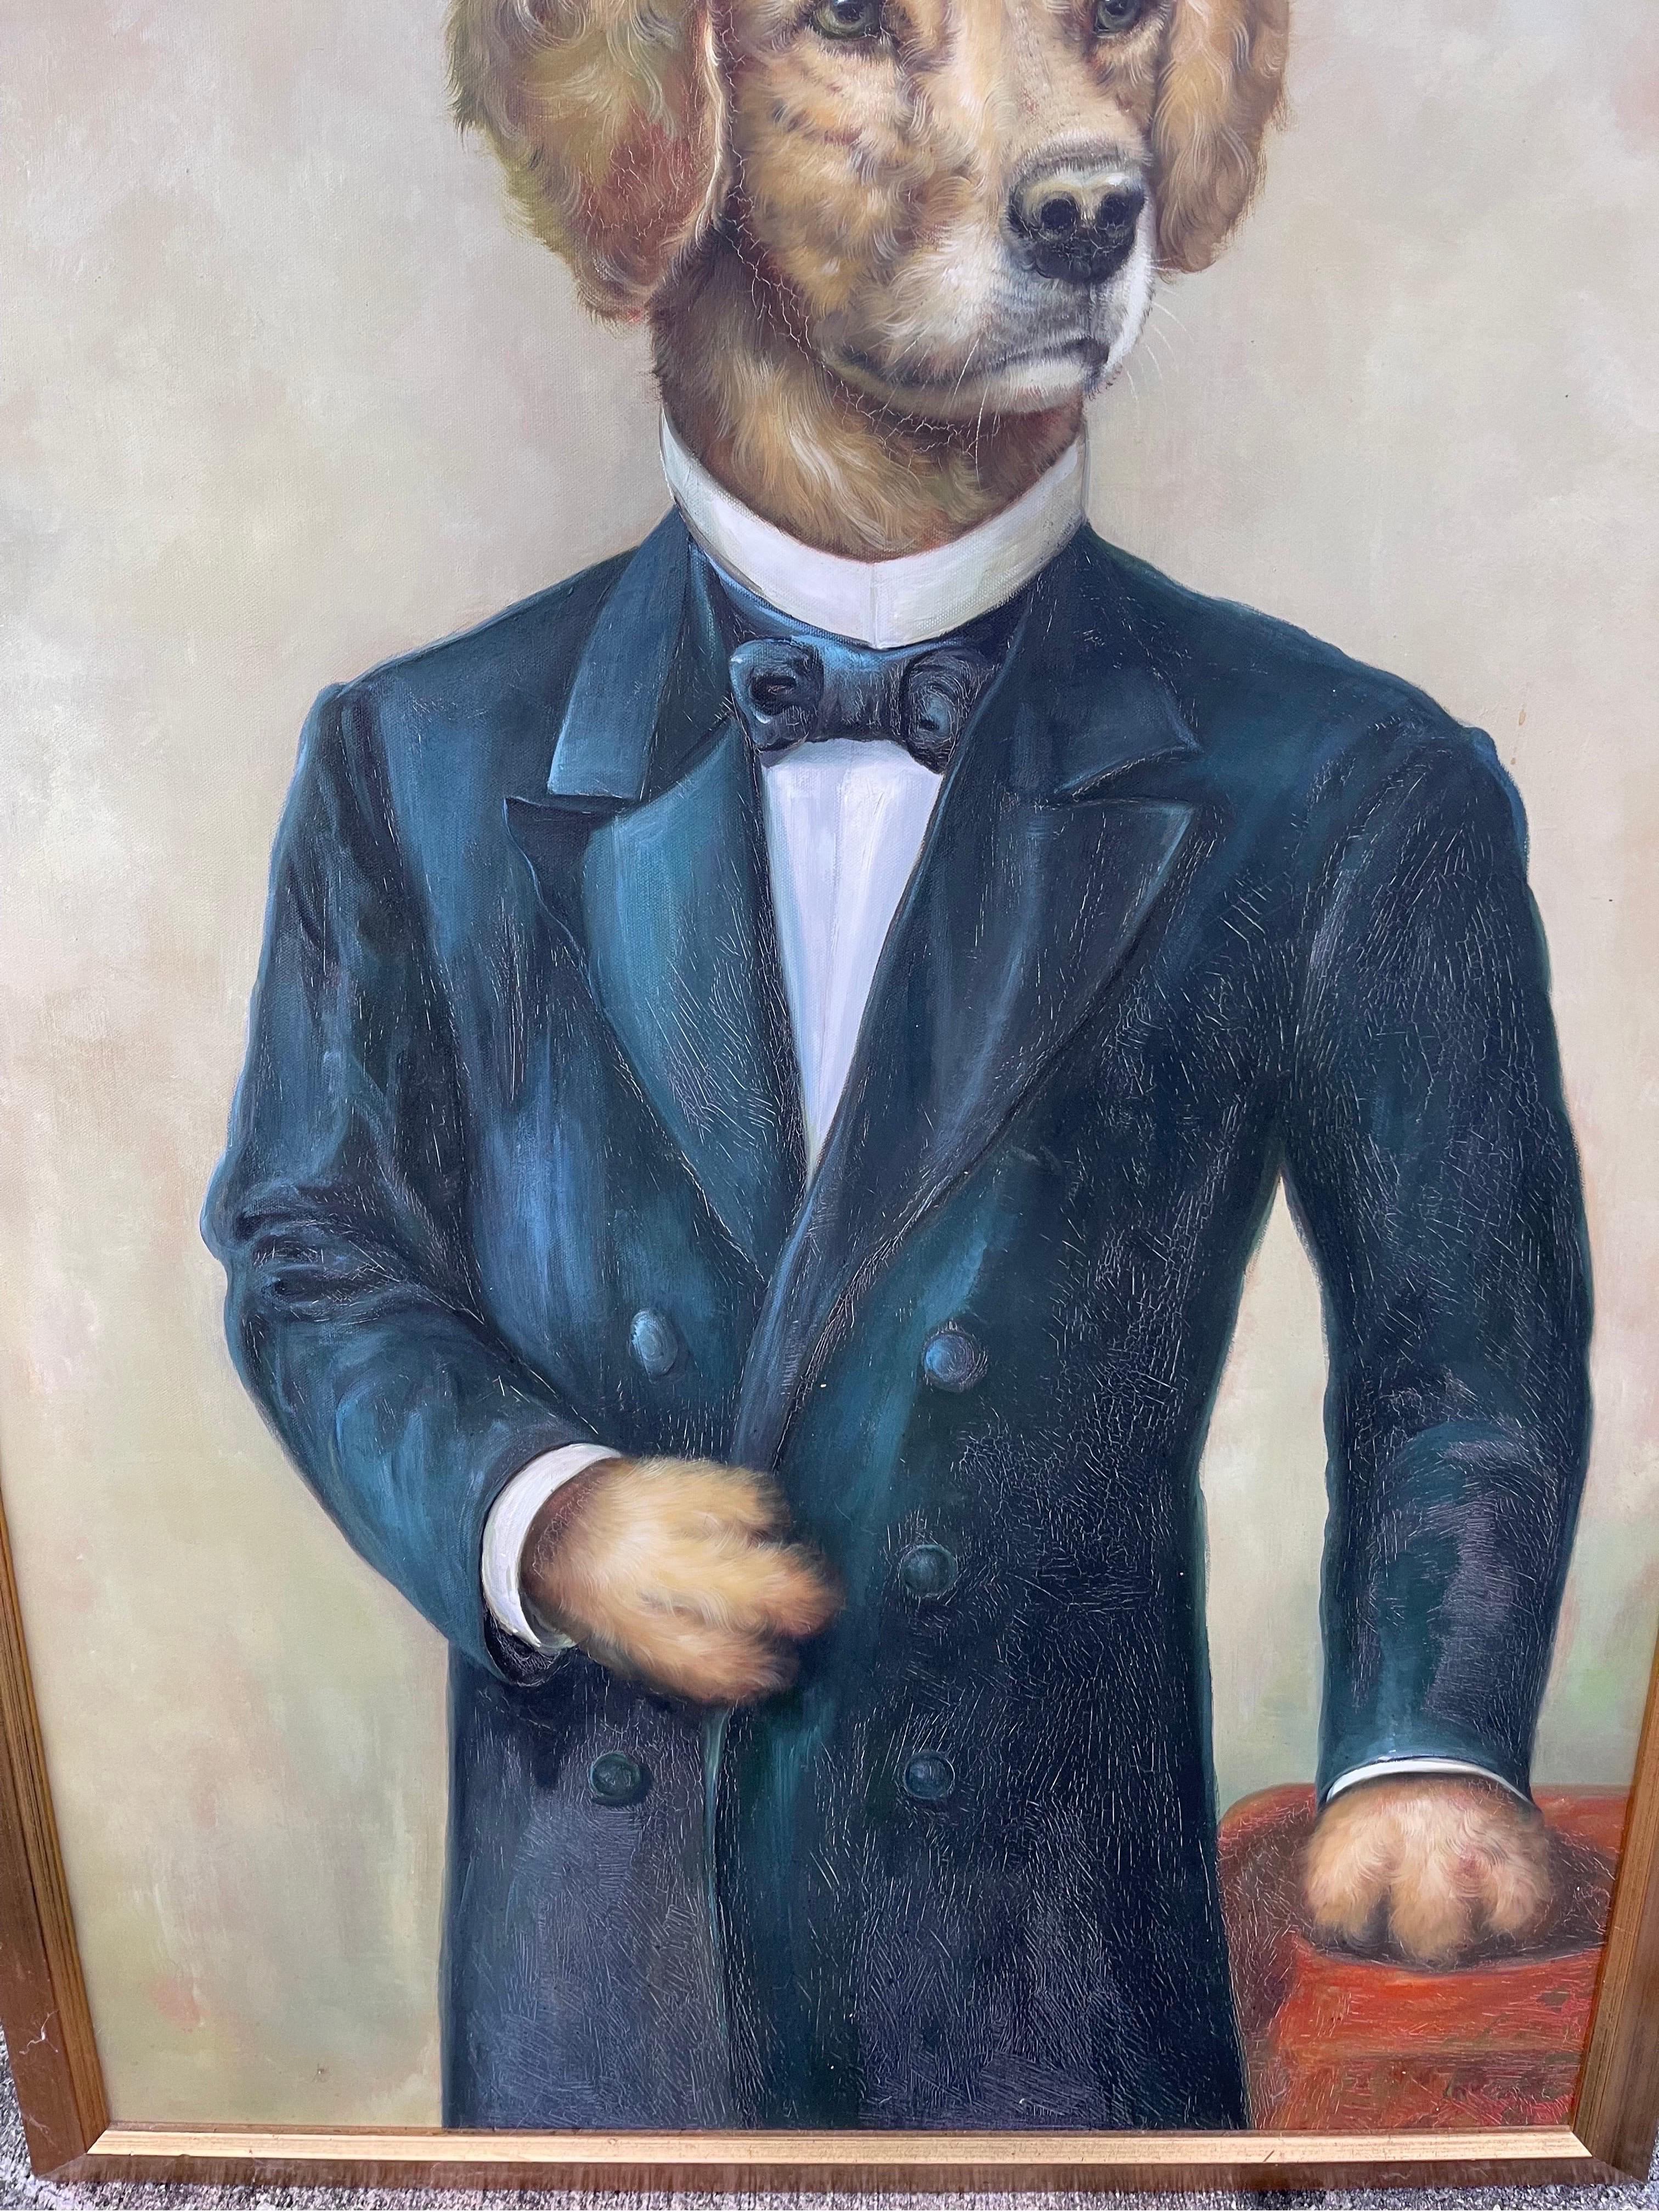 Anthropomorphic Golden Retriever Dog in Tuxedo, Acrylic on Canvas Painting 4